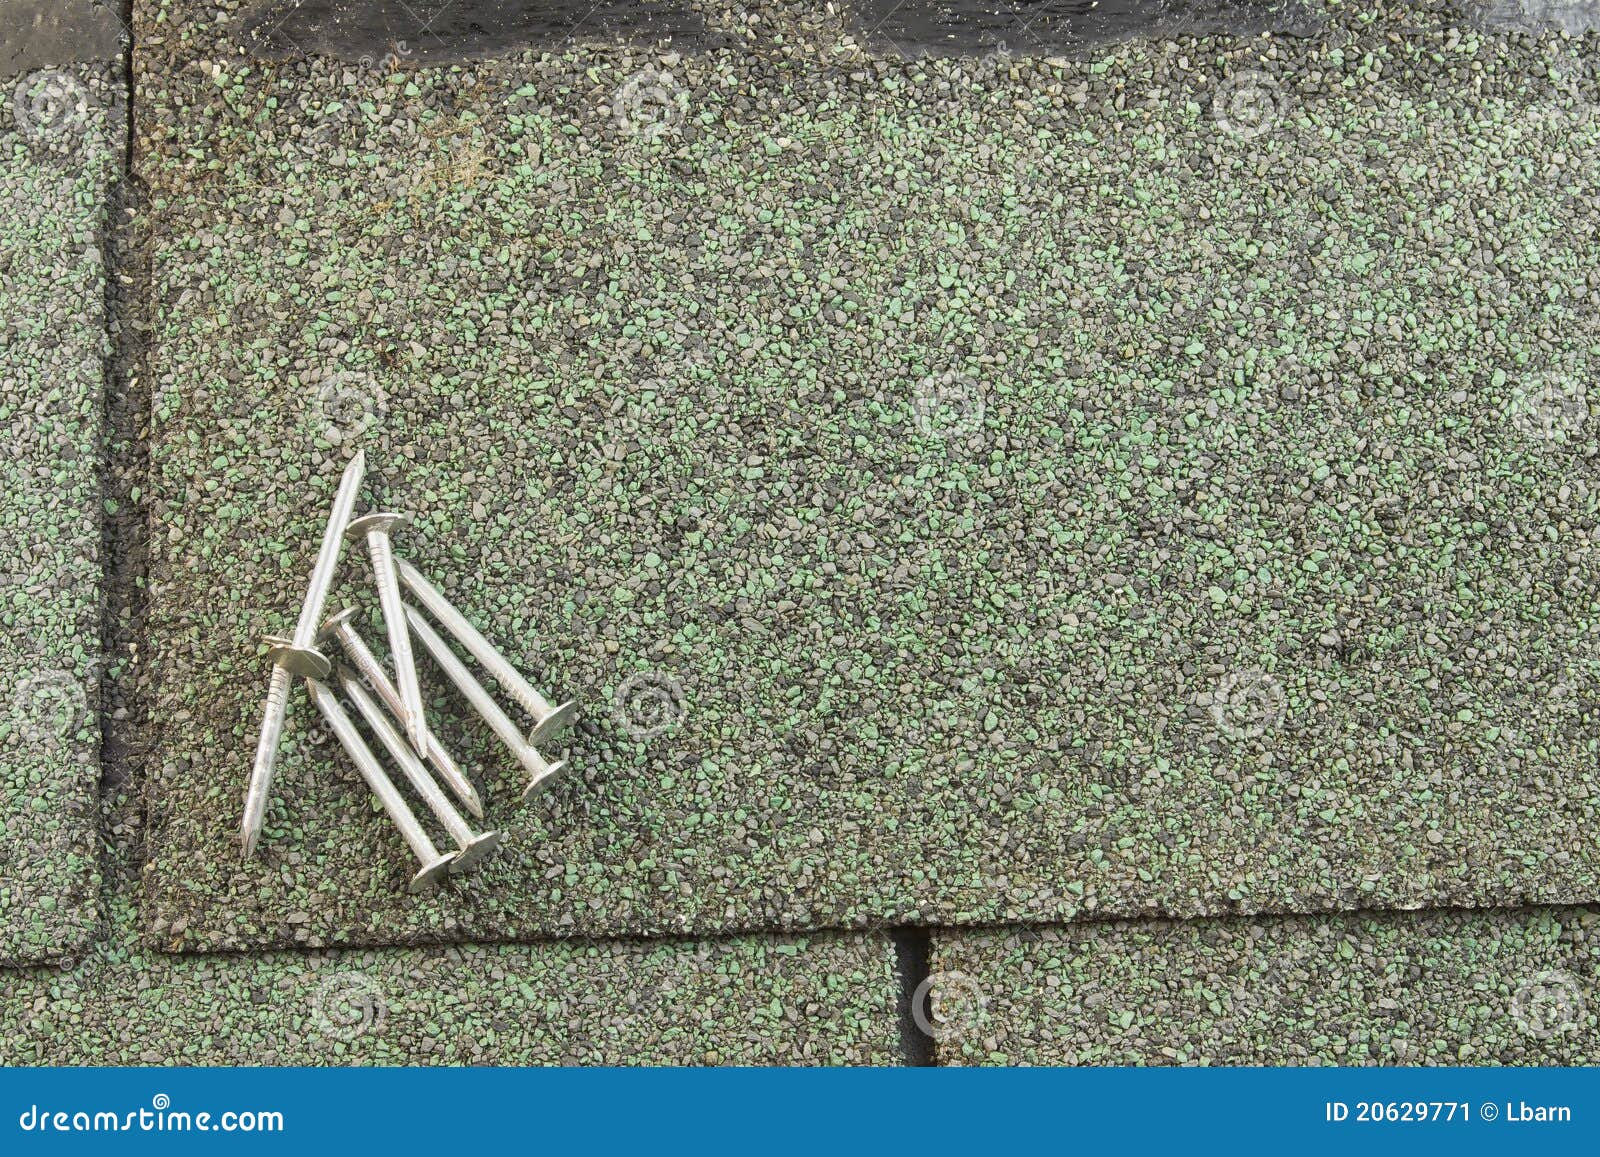 roofing-nails-shingle-20629771.jpg